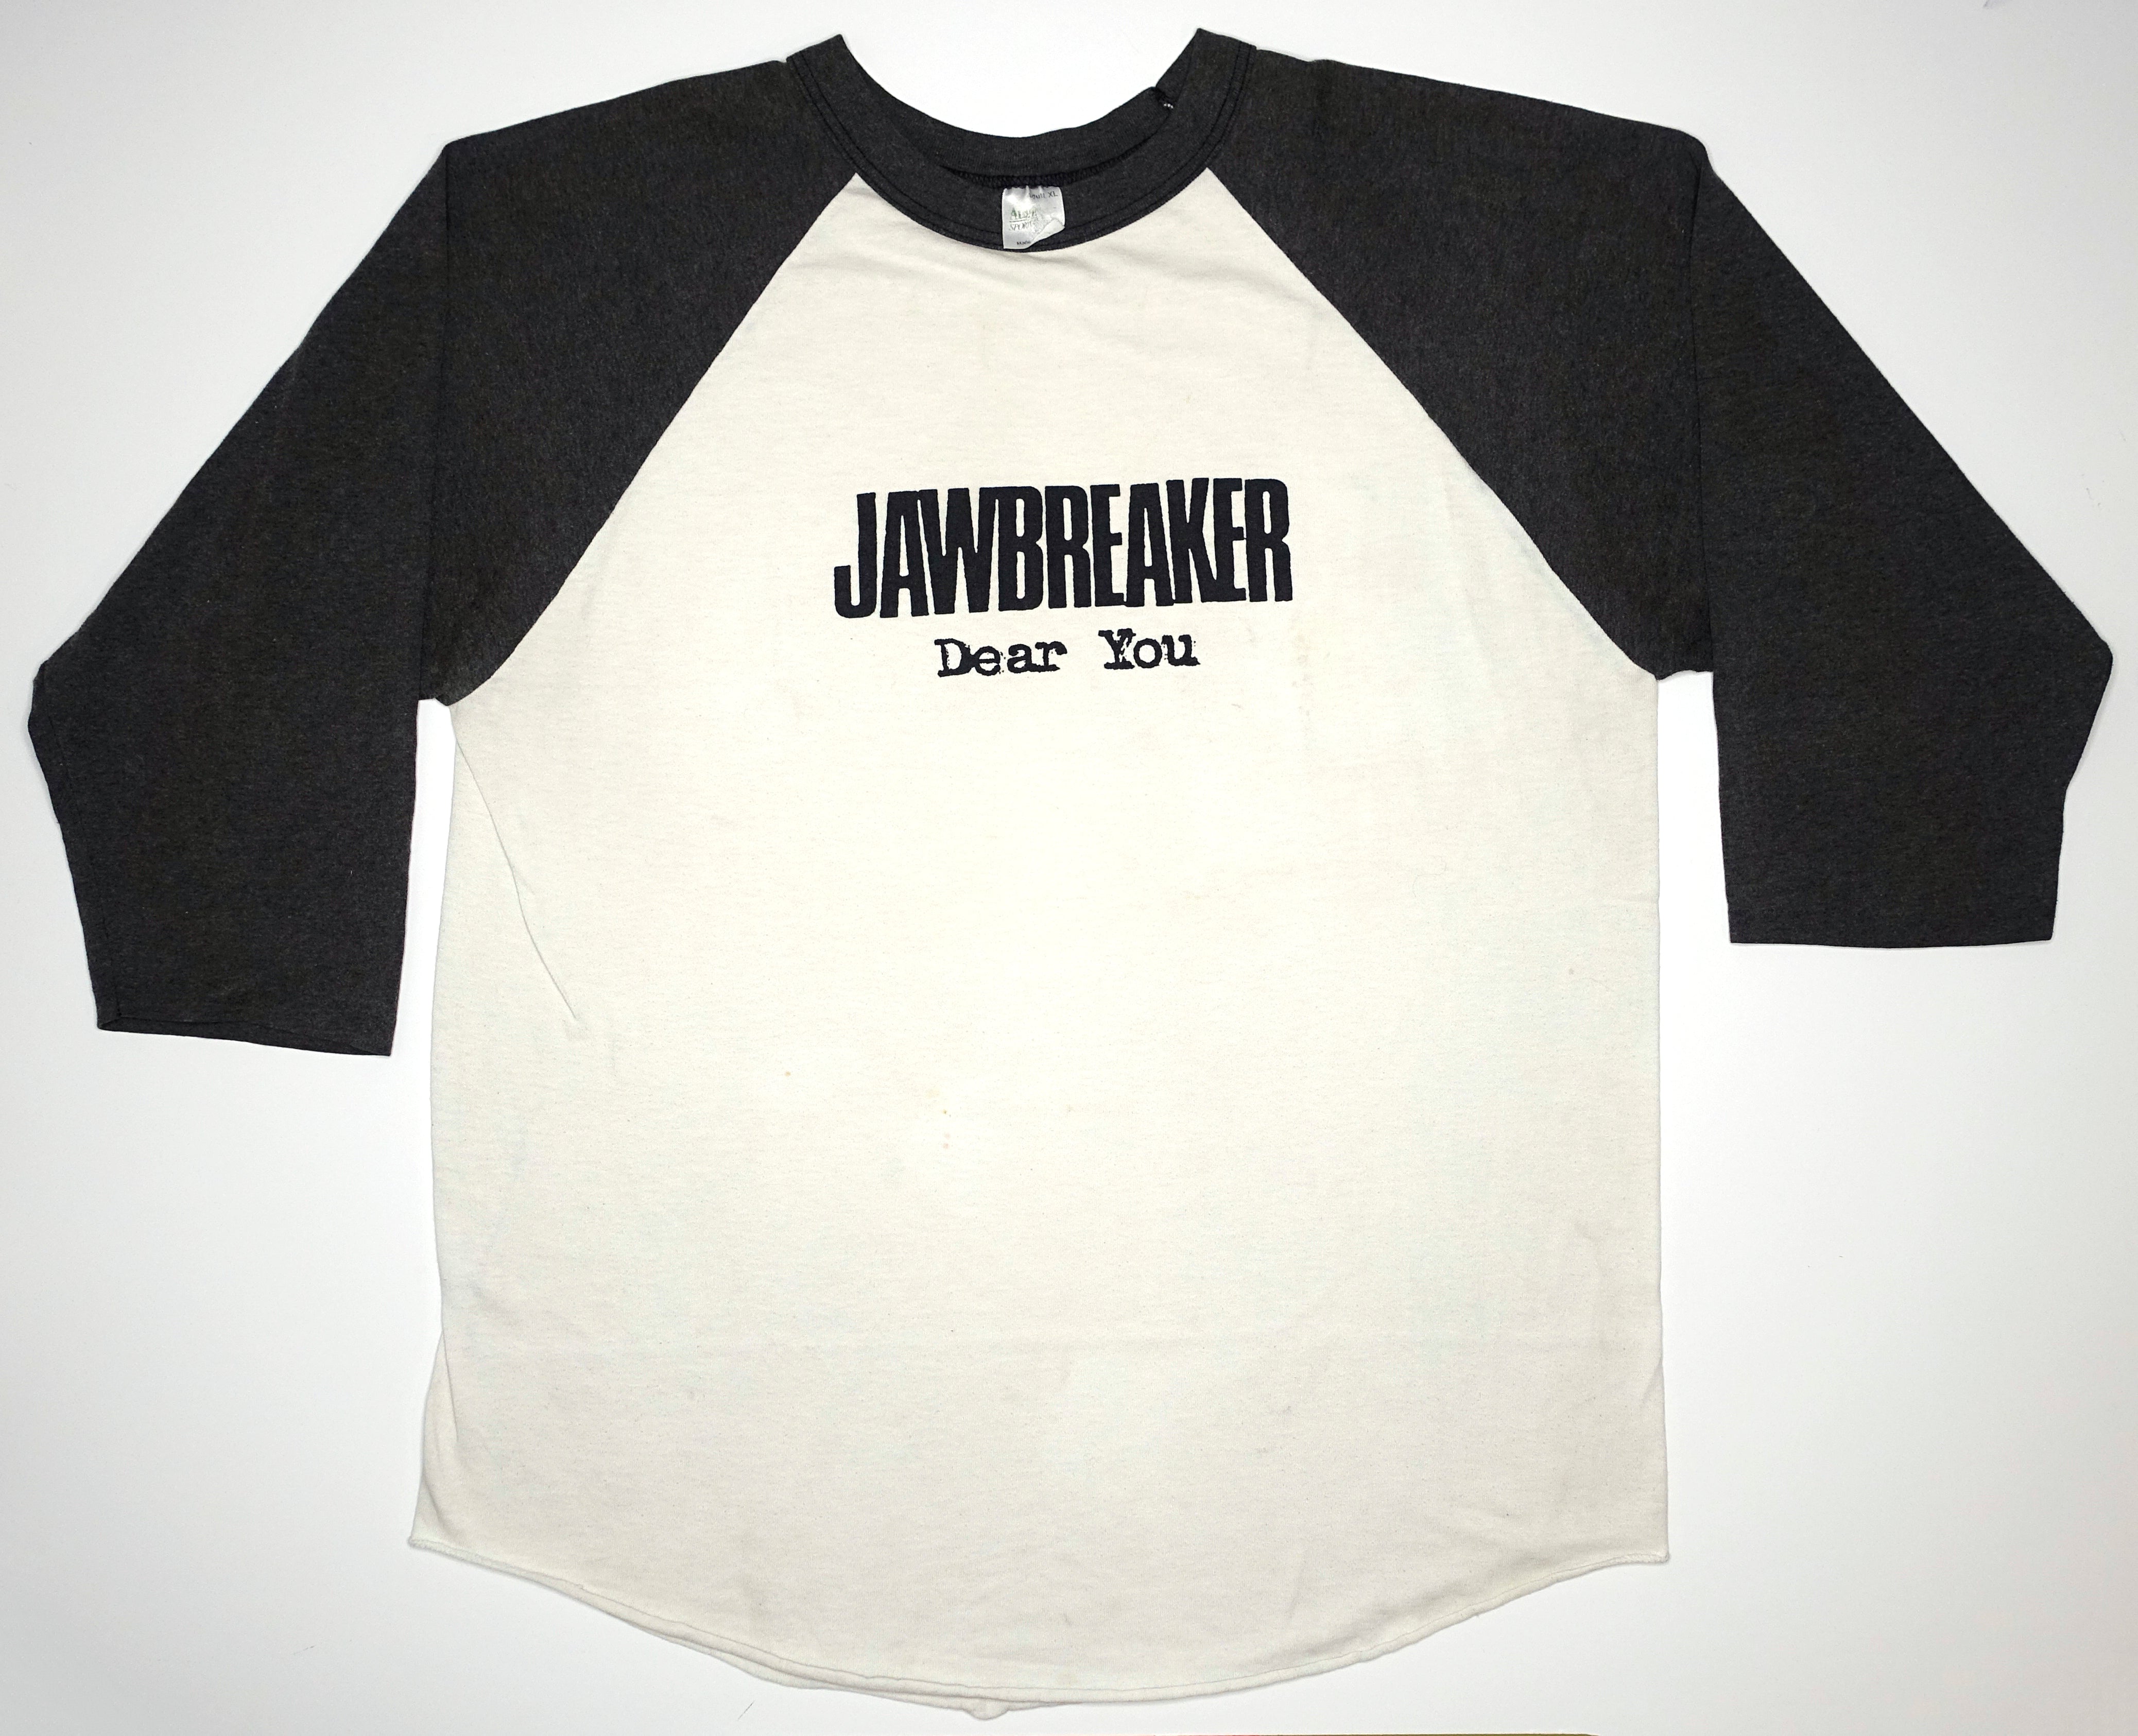 Jawbreaker - Dear You Raglan/Jersey 1995 Tour Shirt Size XL